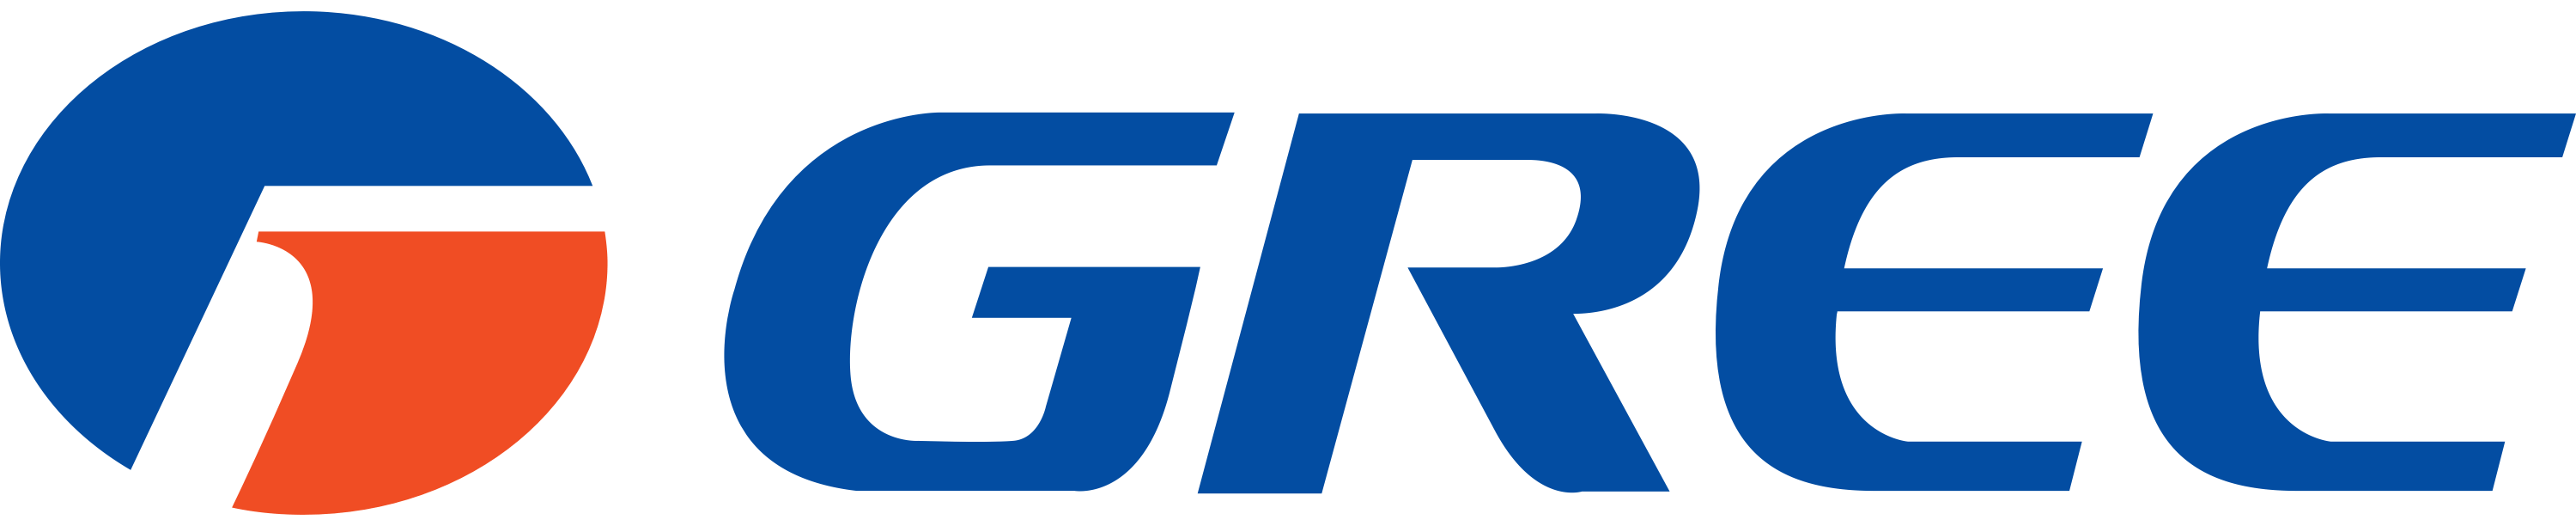 klimatizácia gree logo